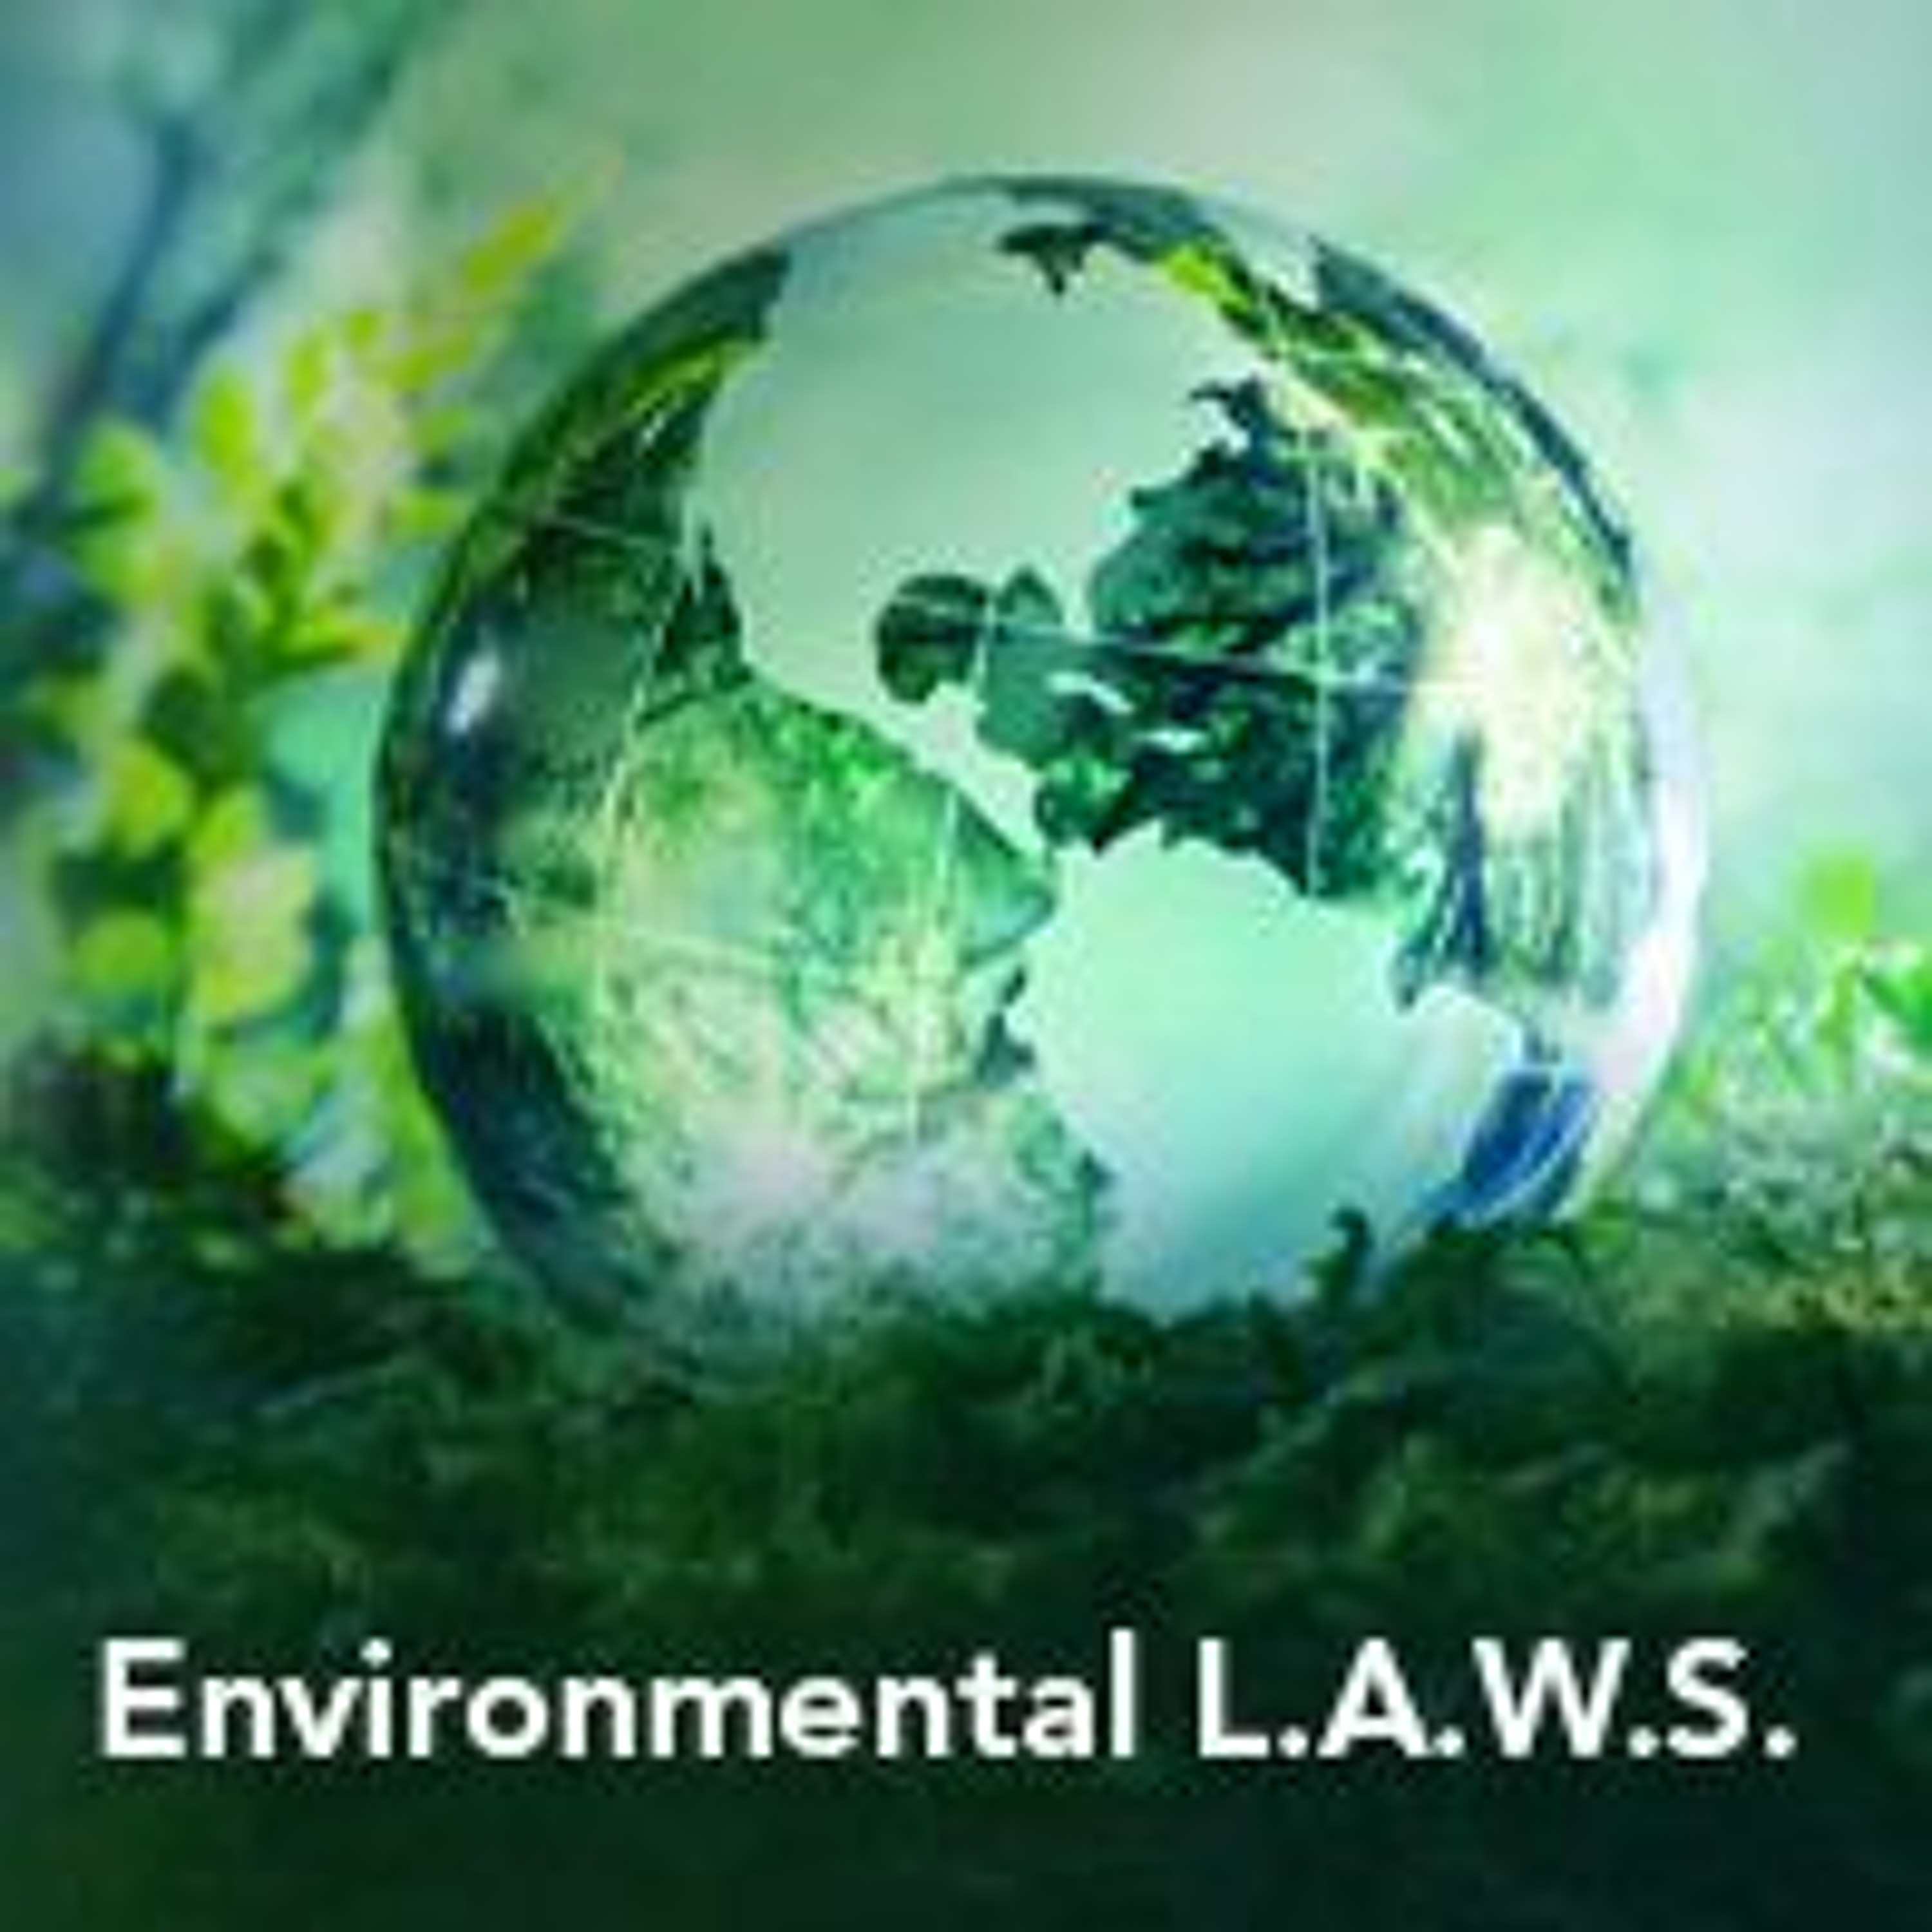 Environmental L.A.W.S. Inside The Minds Of ESG - Gurus - United